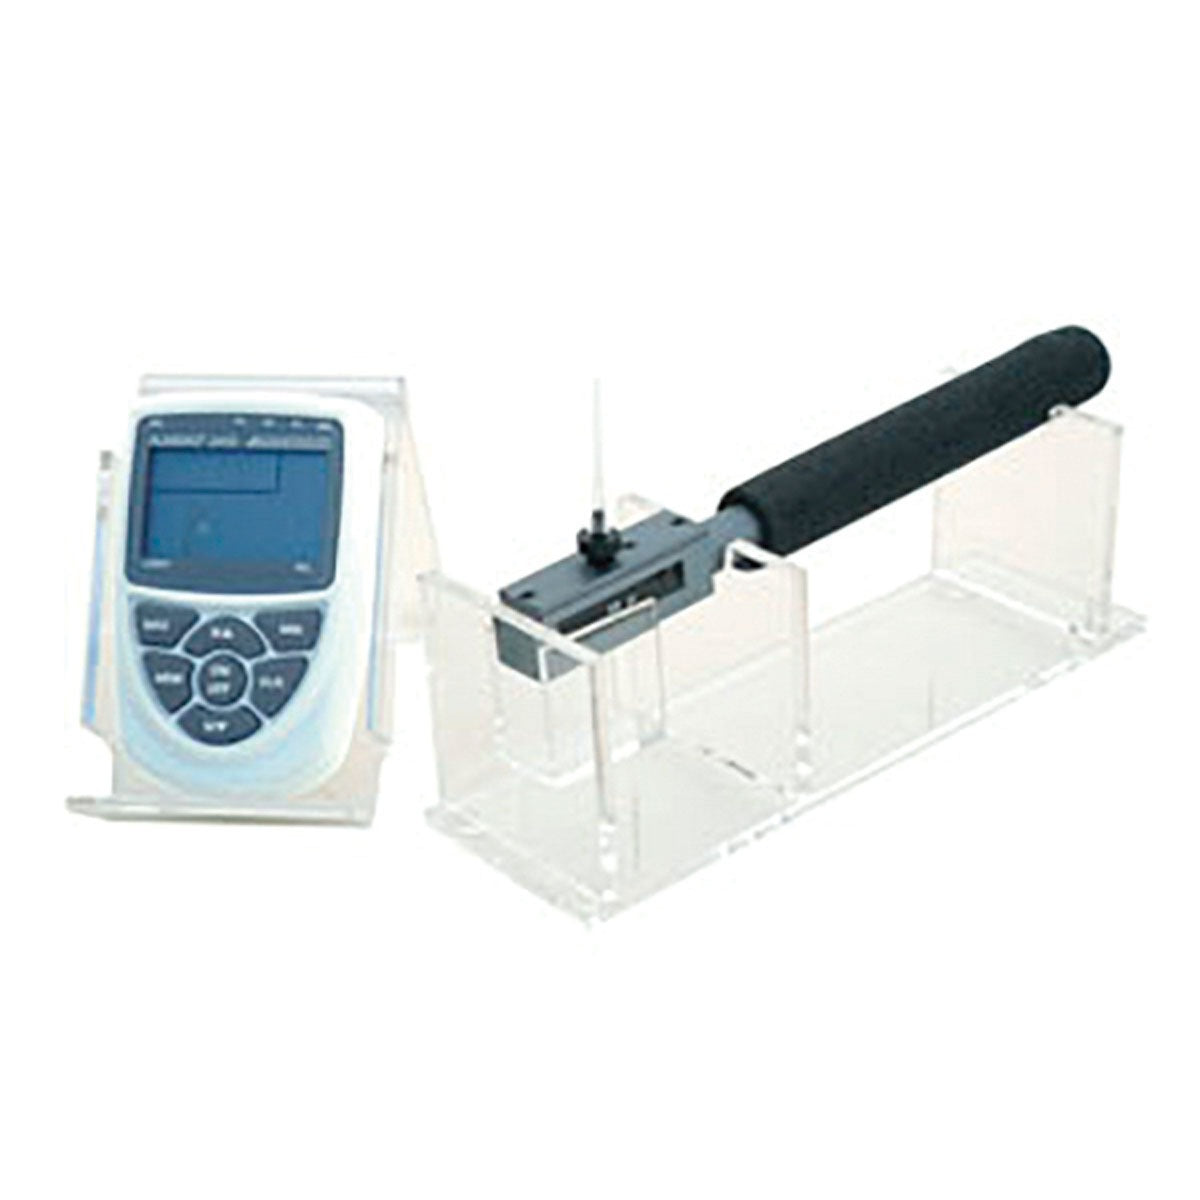 Electronic von Frey Anesthesiometer, Rigid tips, 90g range